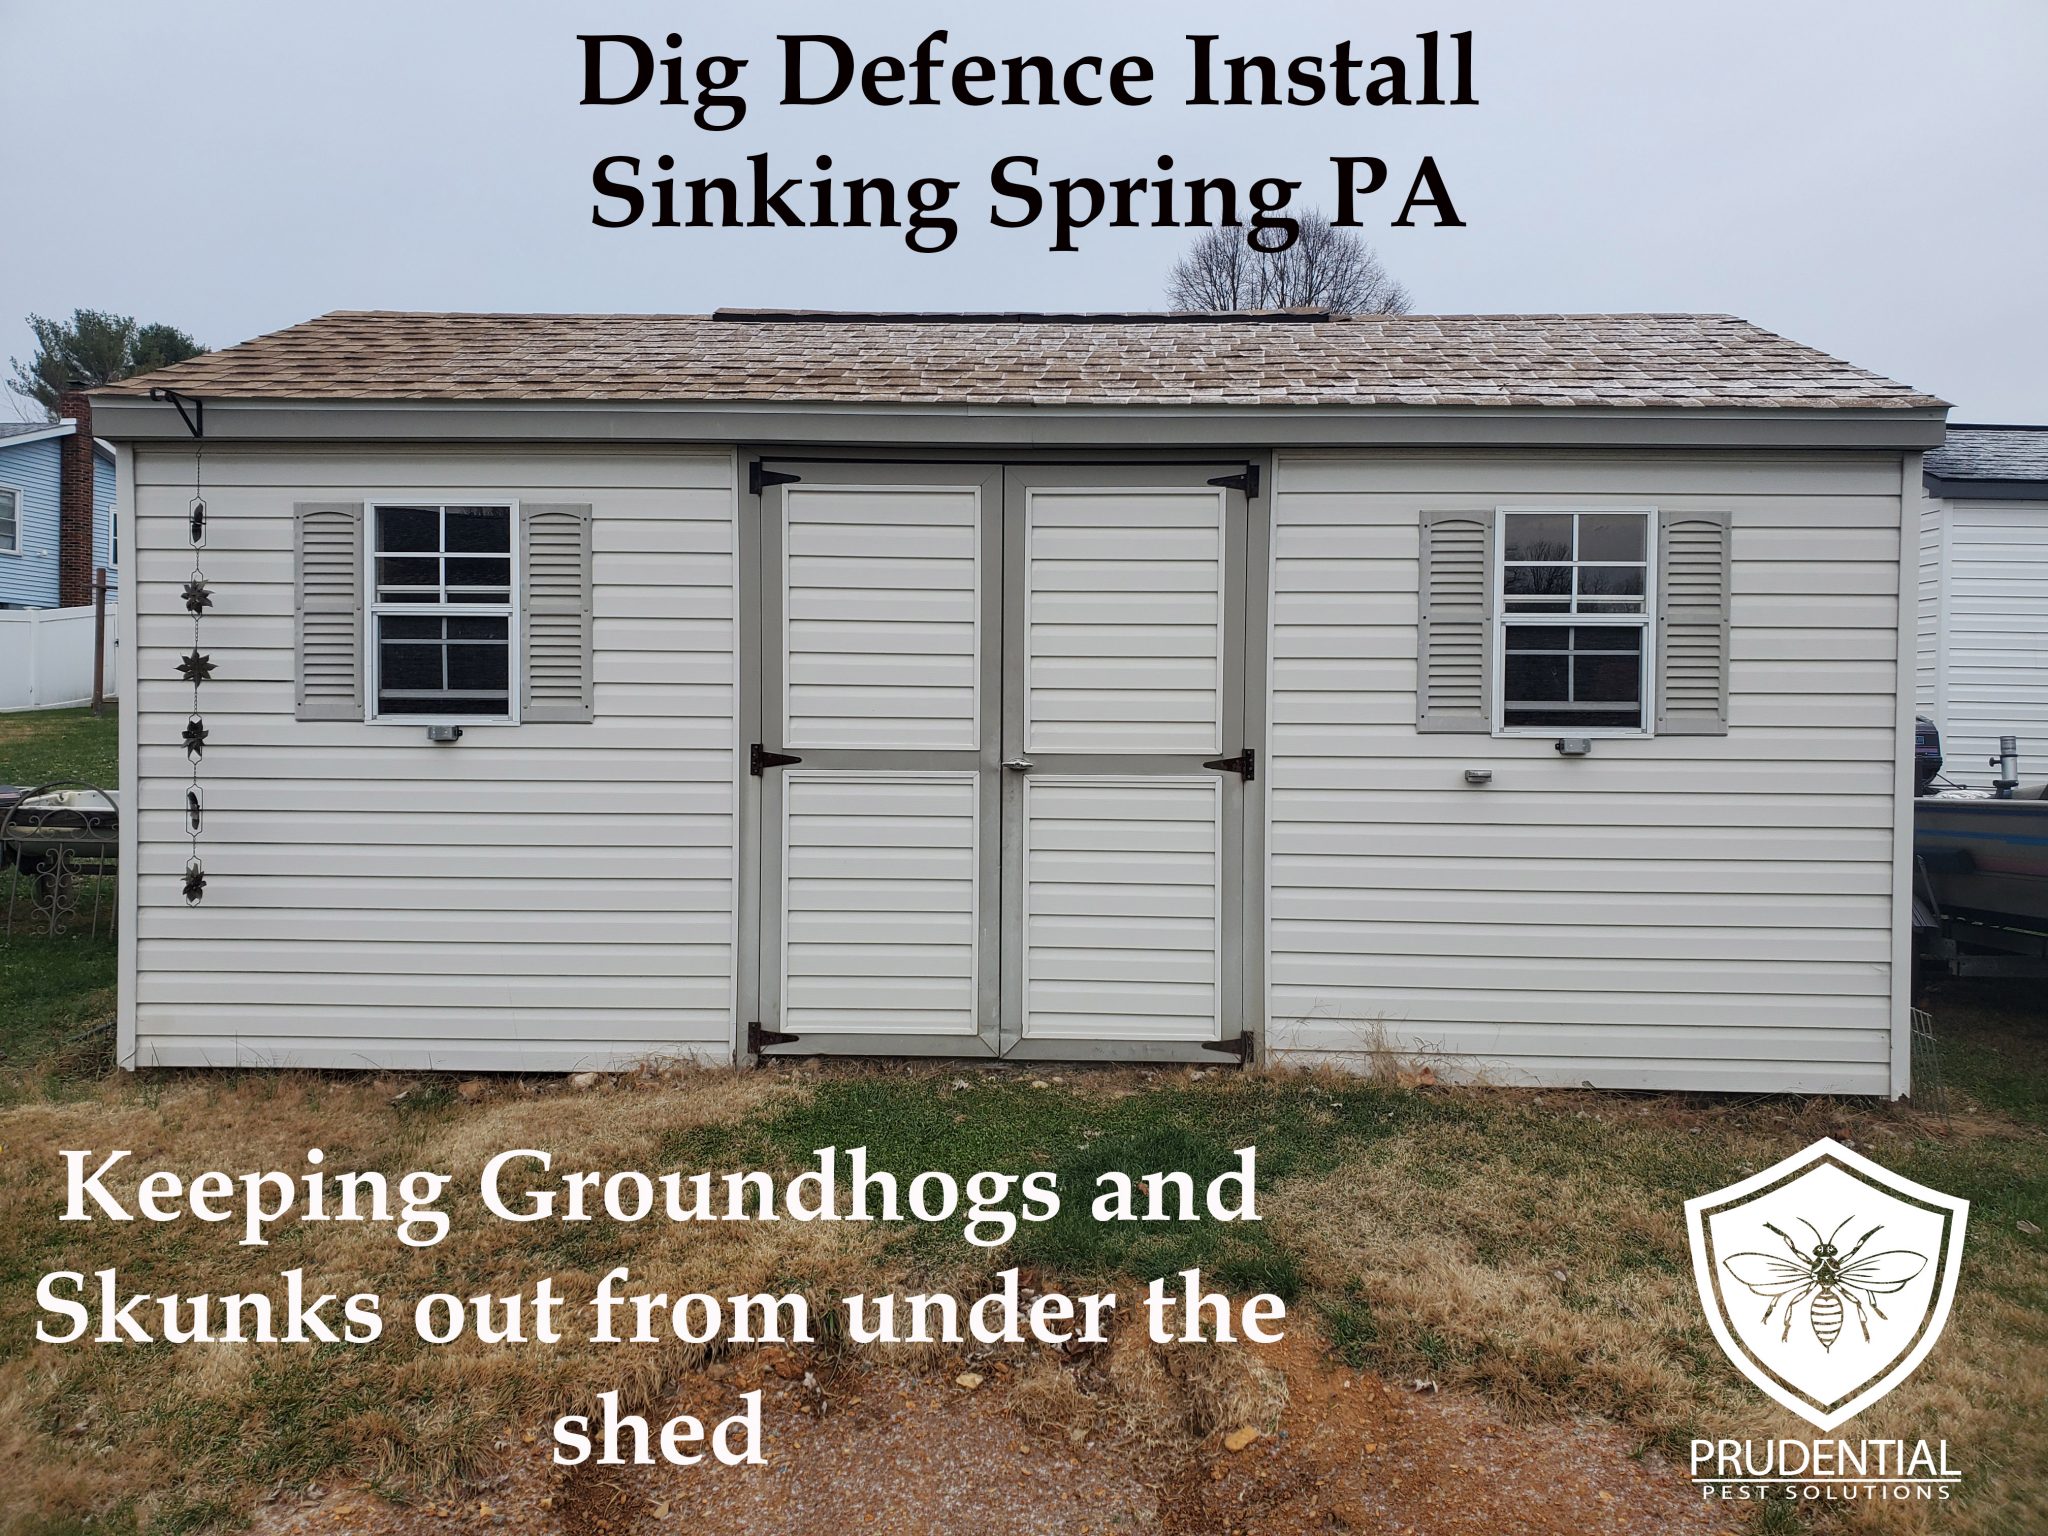 Installing Dig Defence under shed in Sinking Spring PA